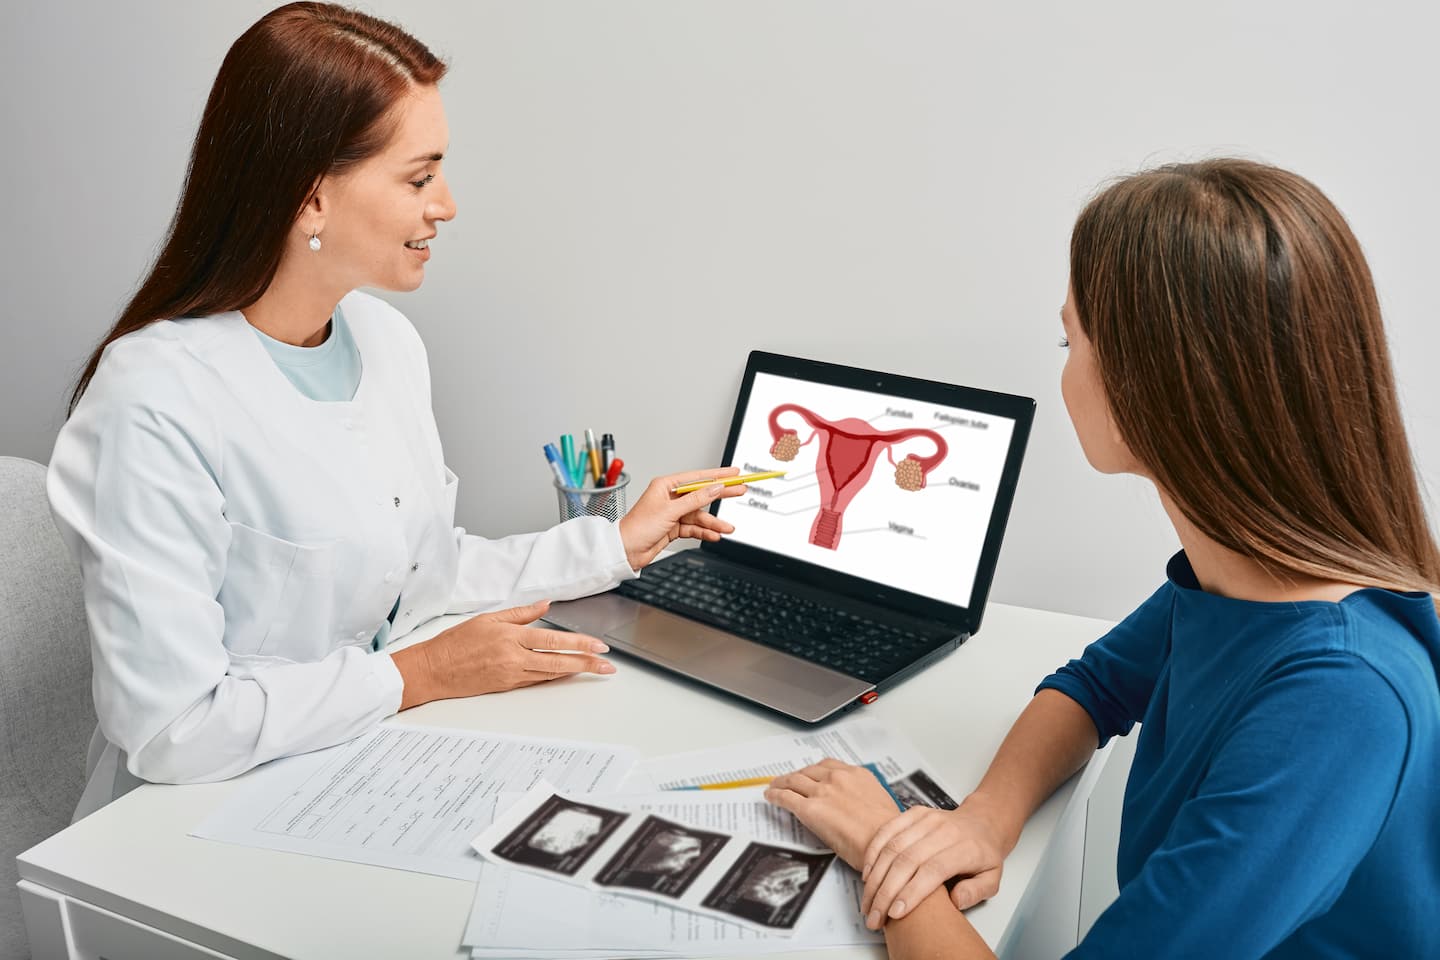 Turkiye polycystic ovary syndrome treatment